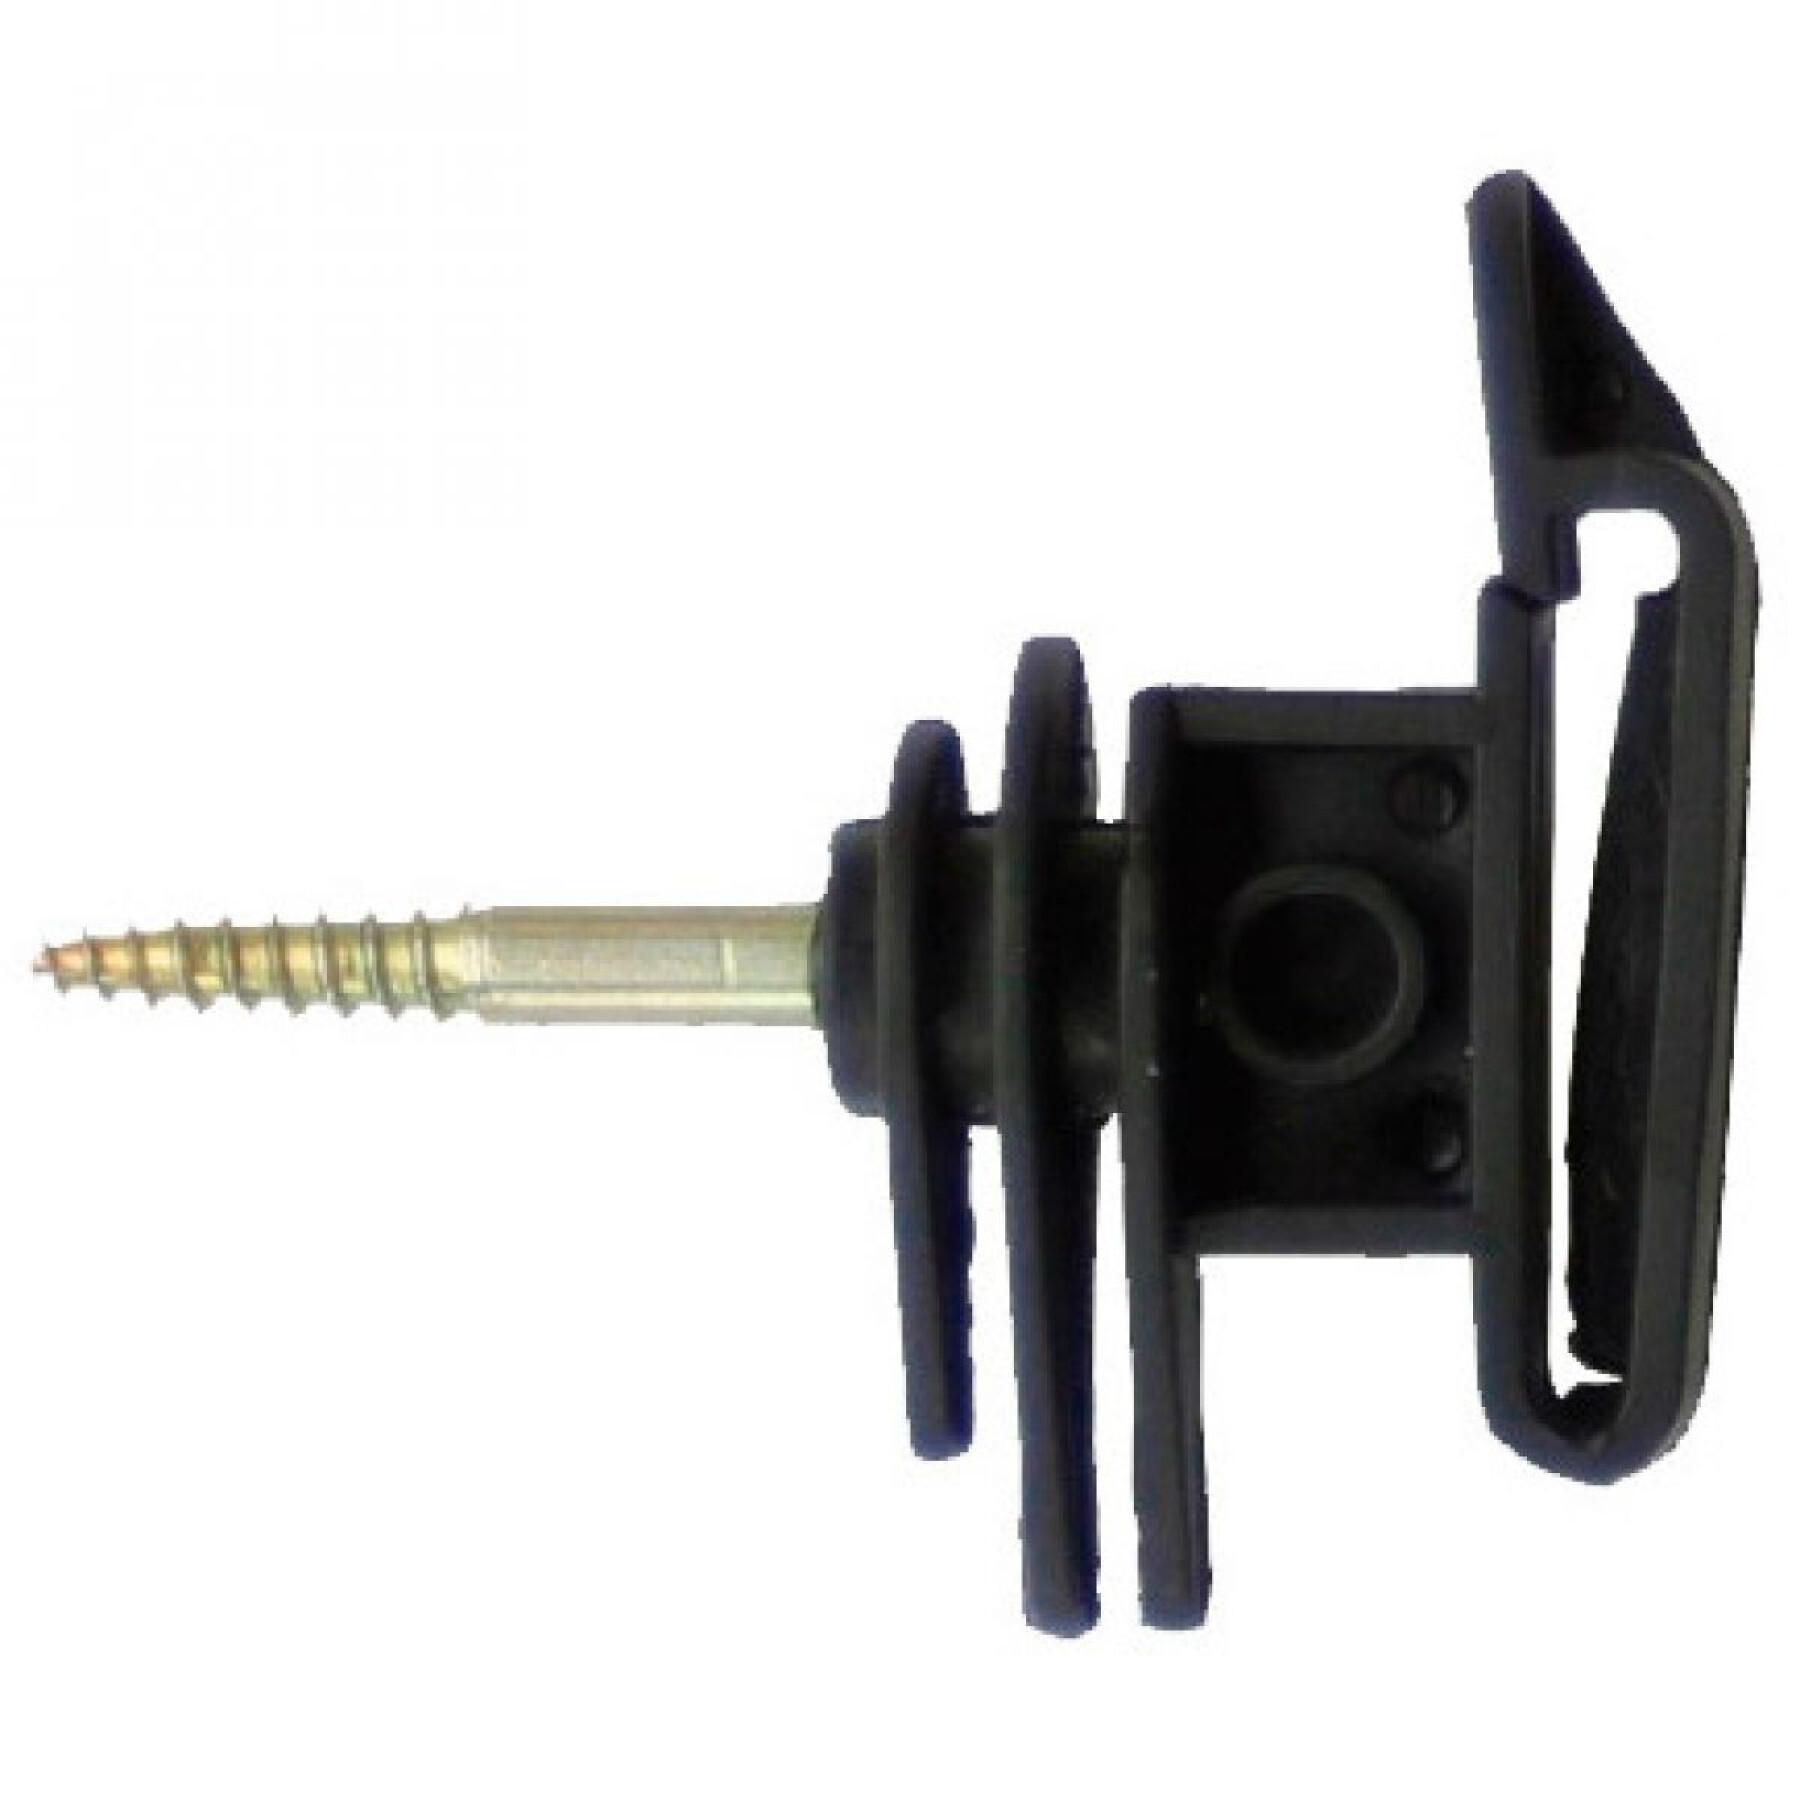 Set of 25 insulated multifunction screws Tattini Fil/band